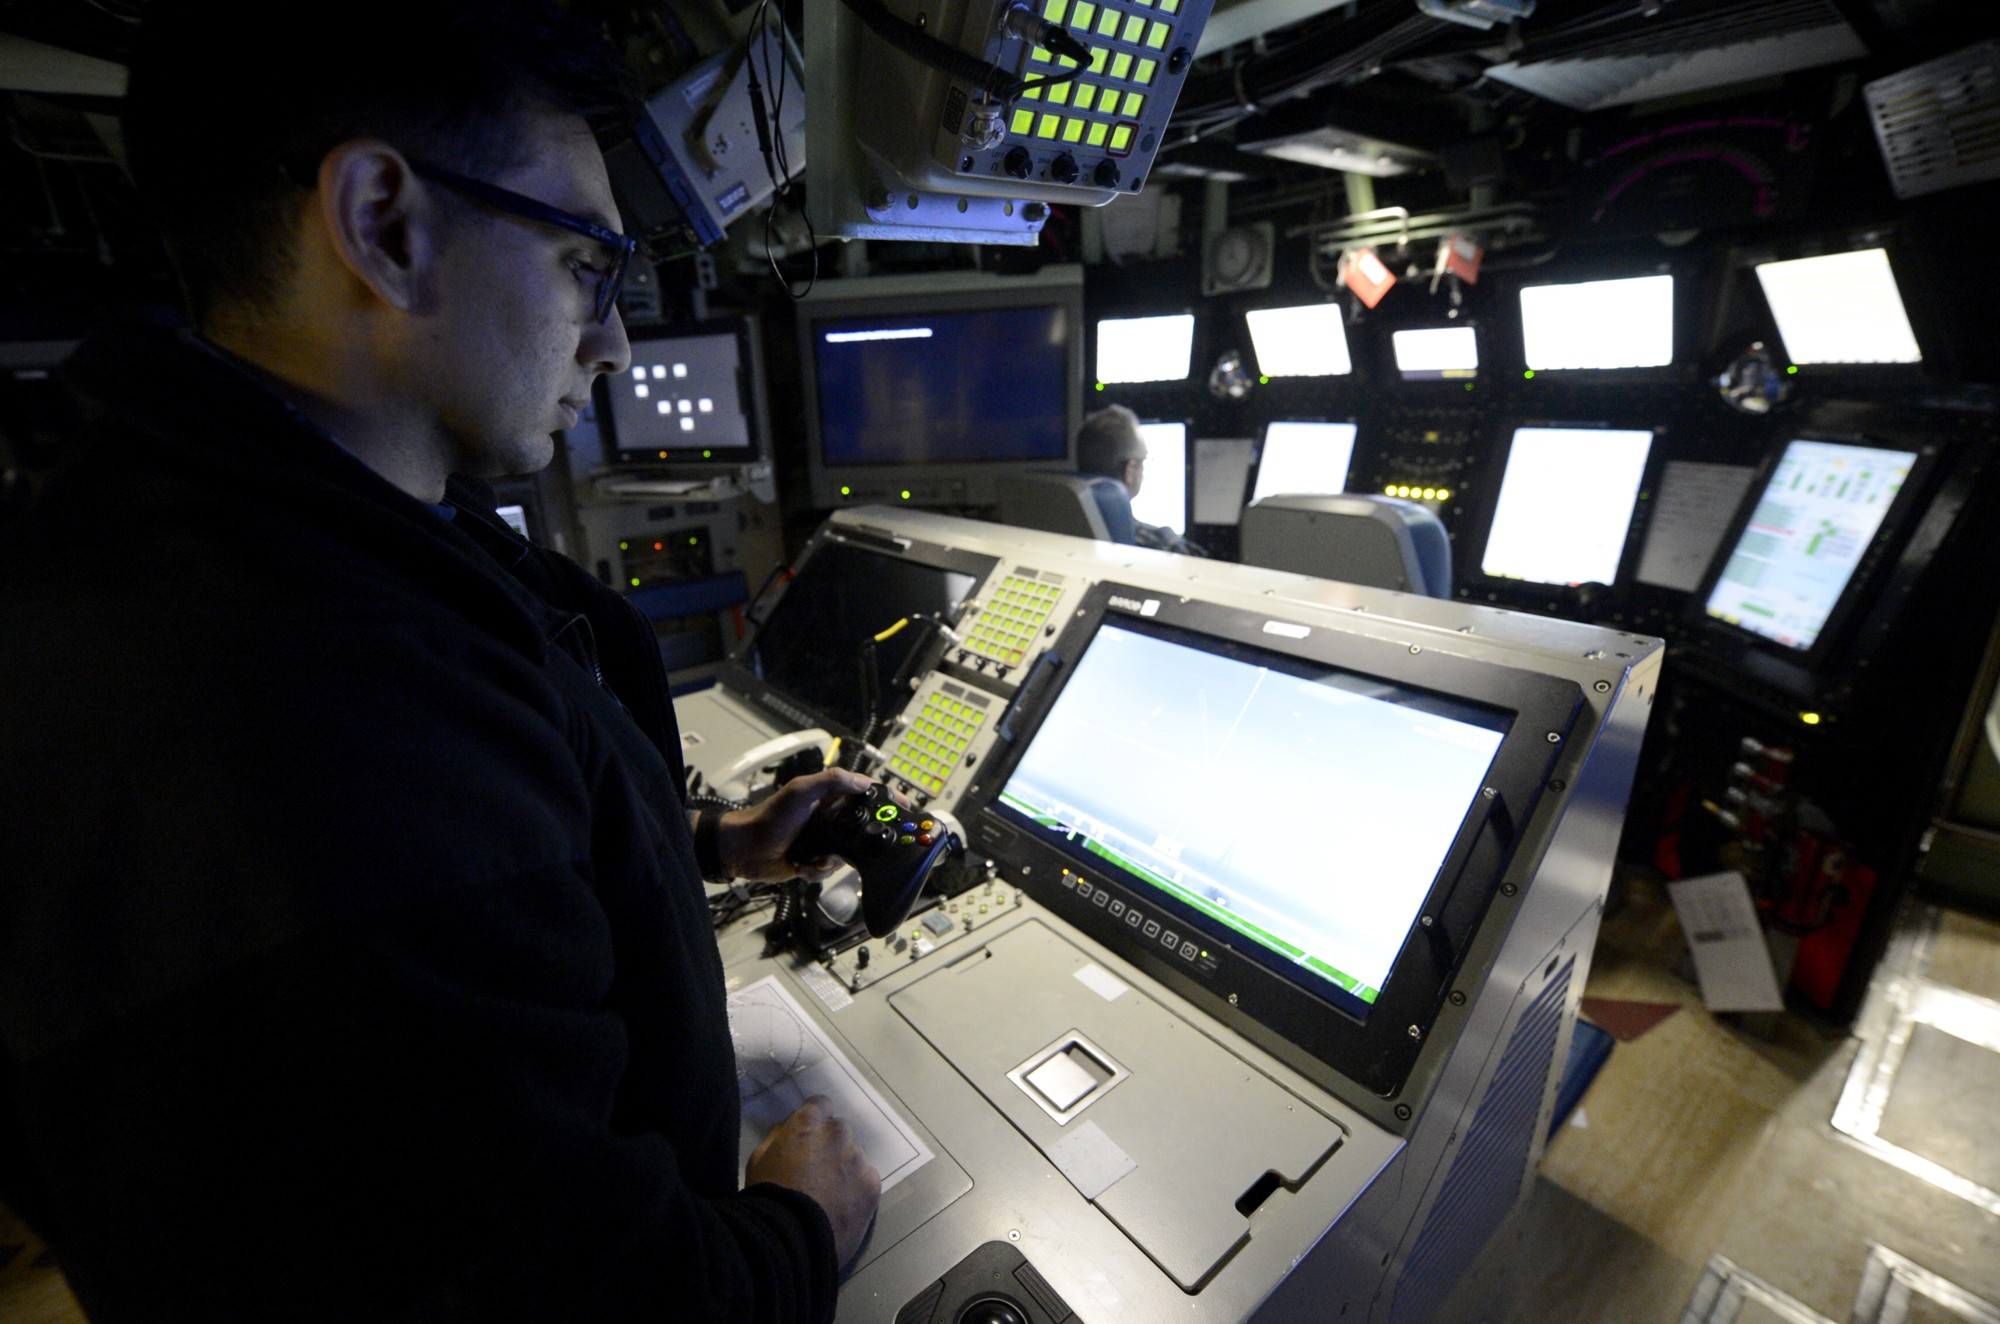 ssn-788 uss colorado virginia class attack submarine us navy 06 control console